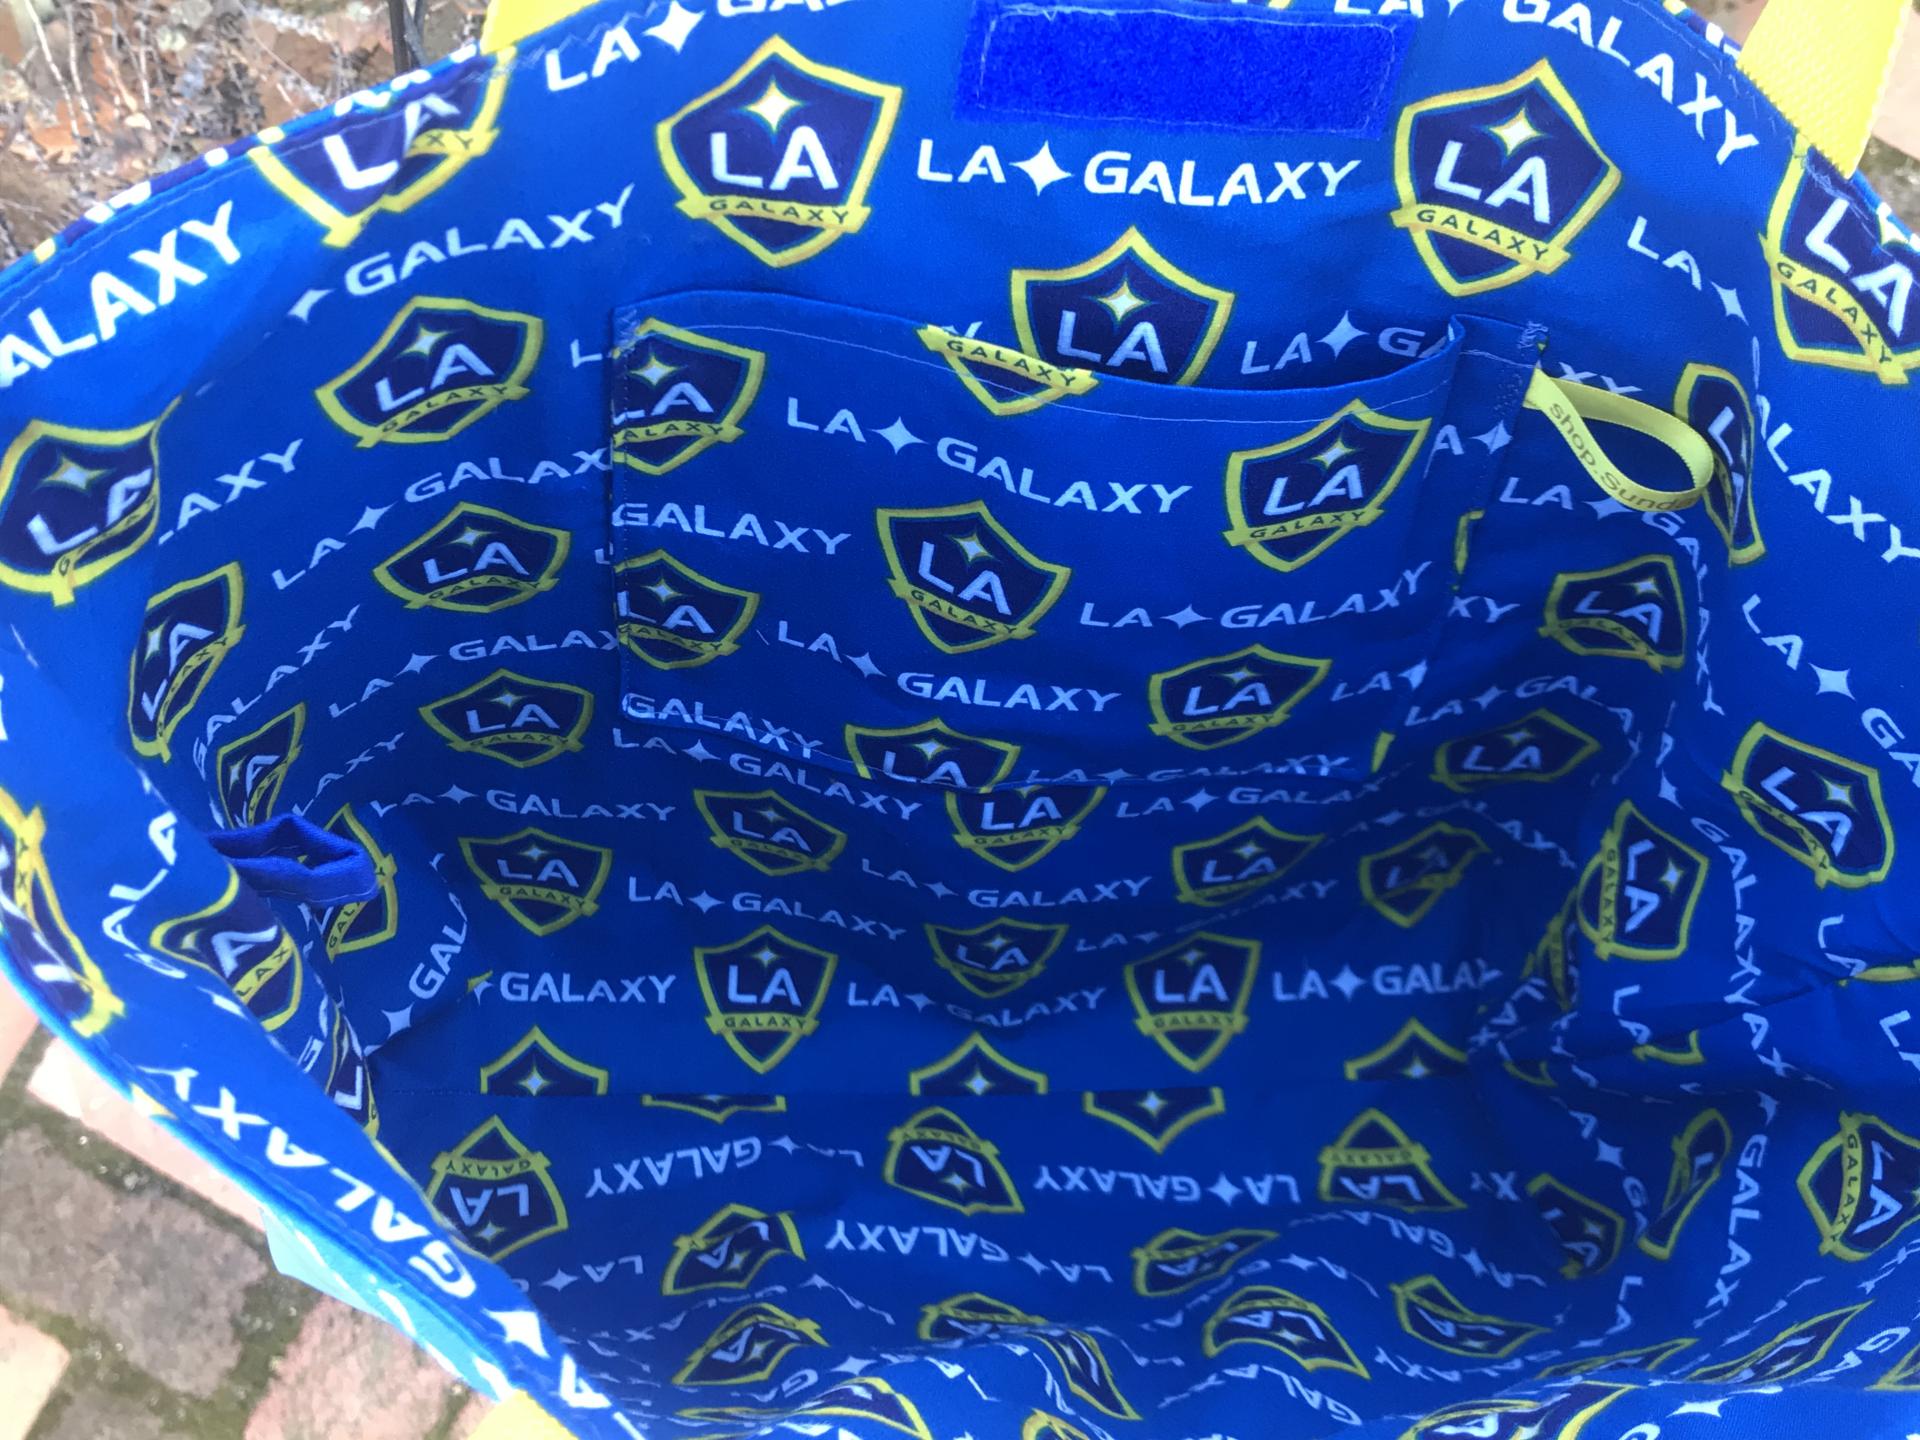 Lining is LA Galaxy print fabric, and has one slip pocket